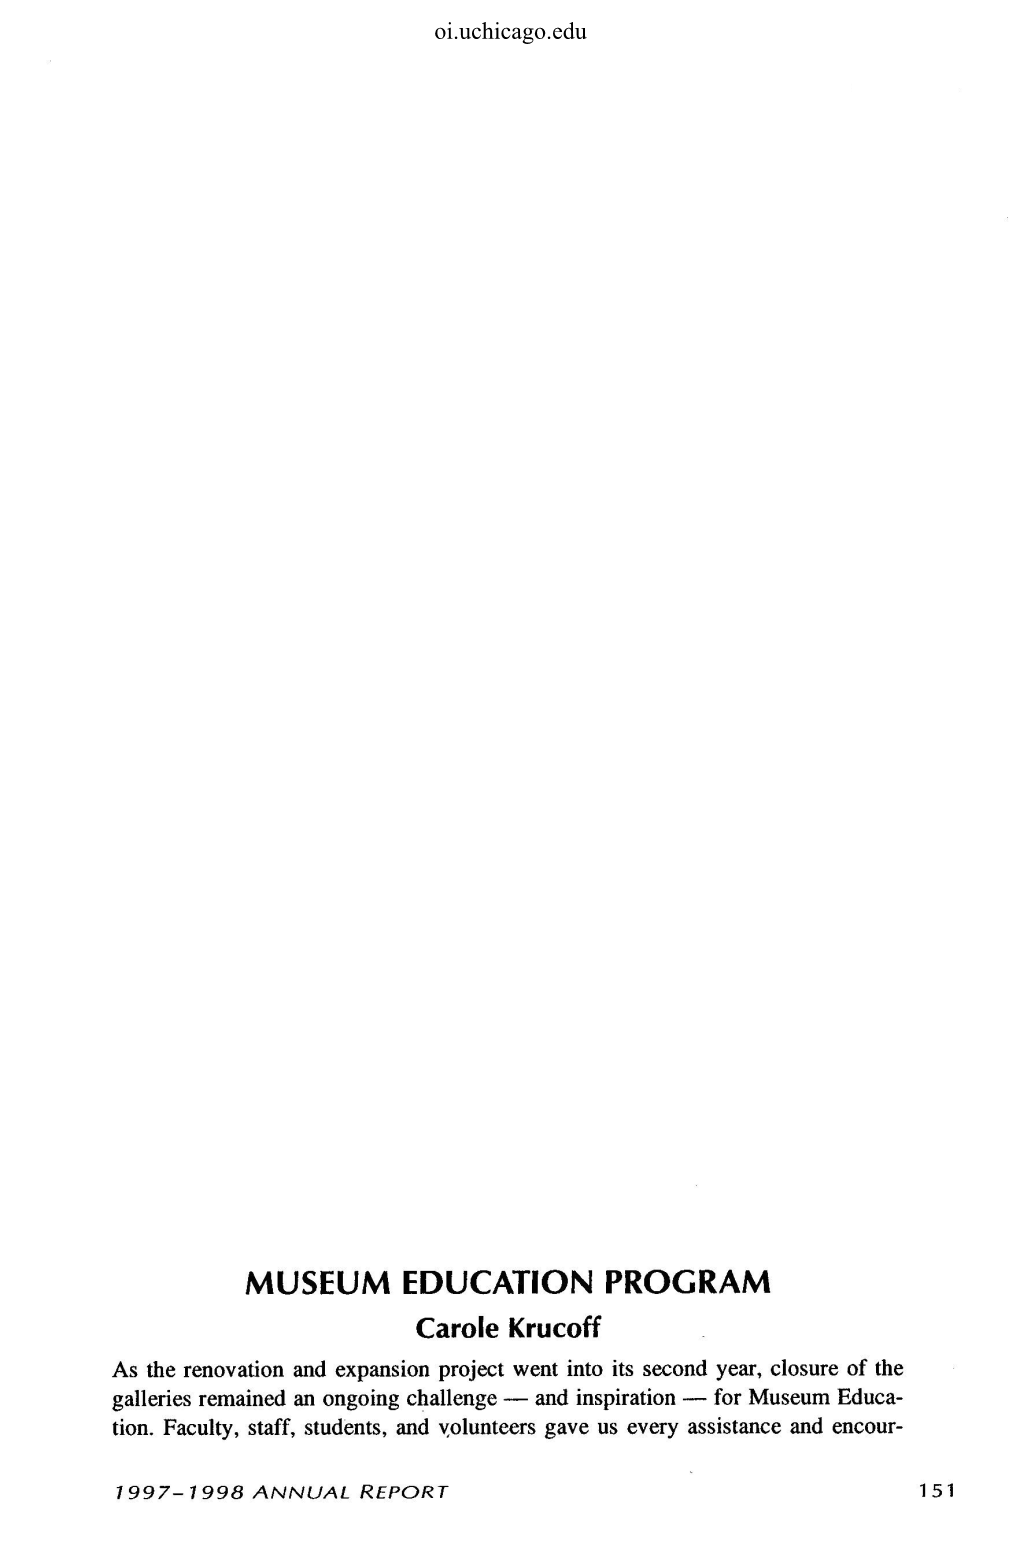 Museum Education Program